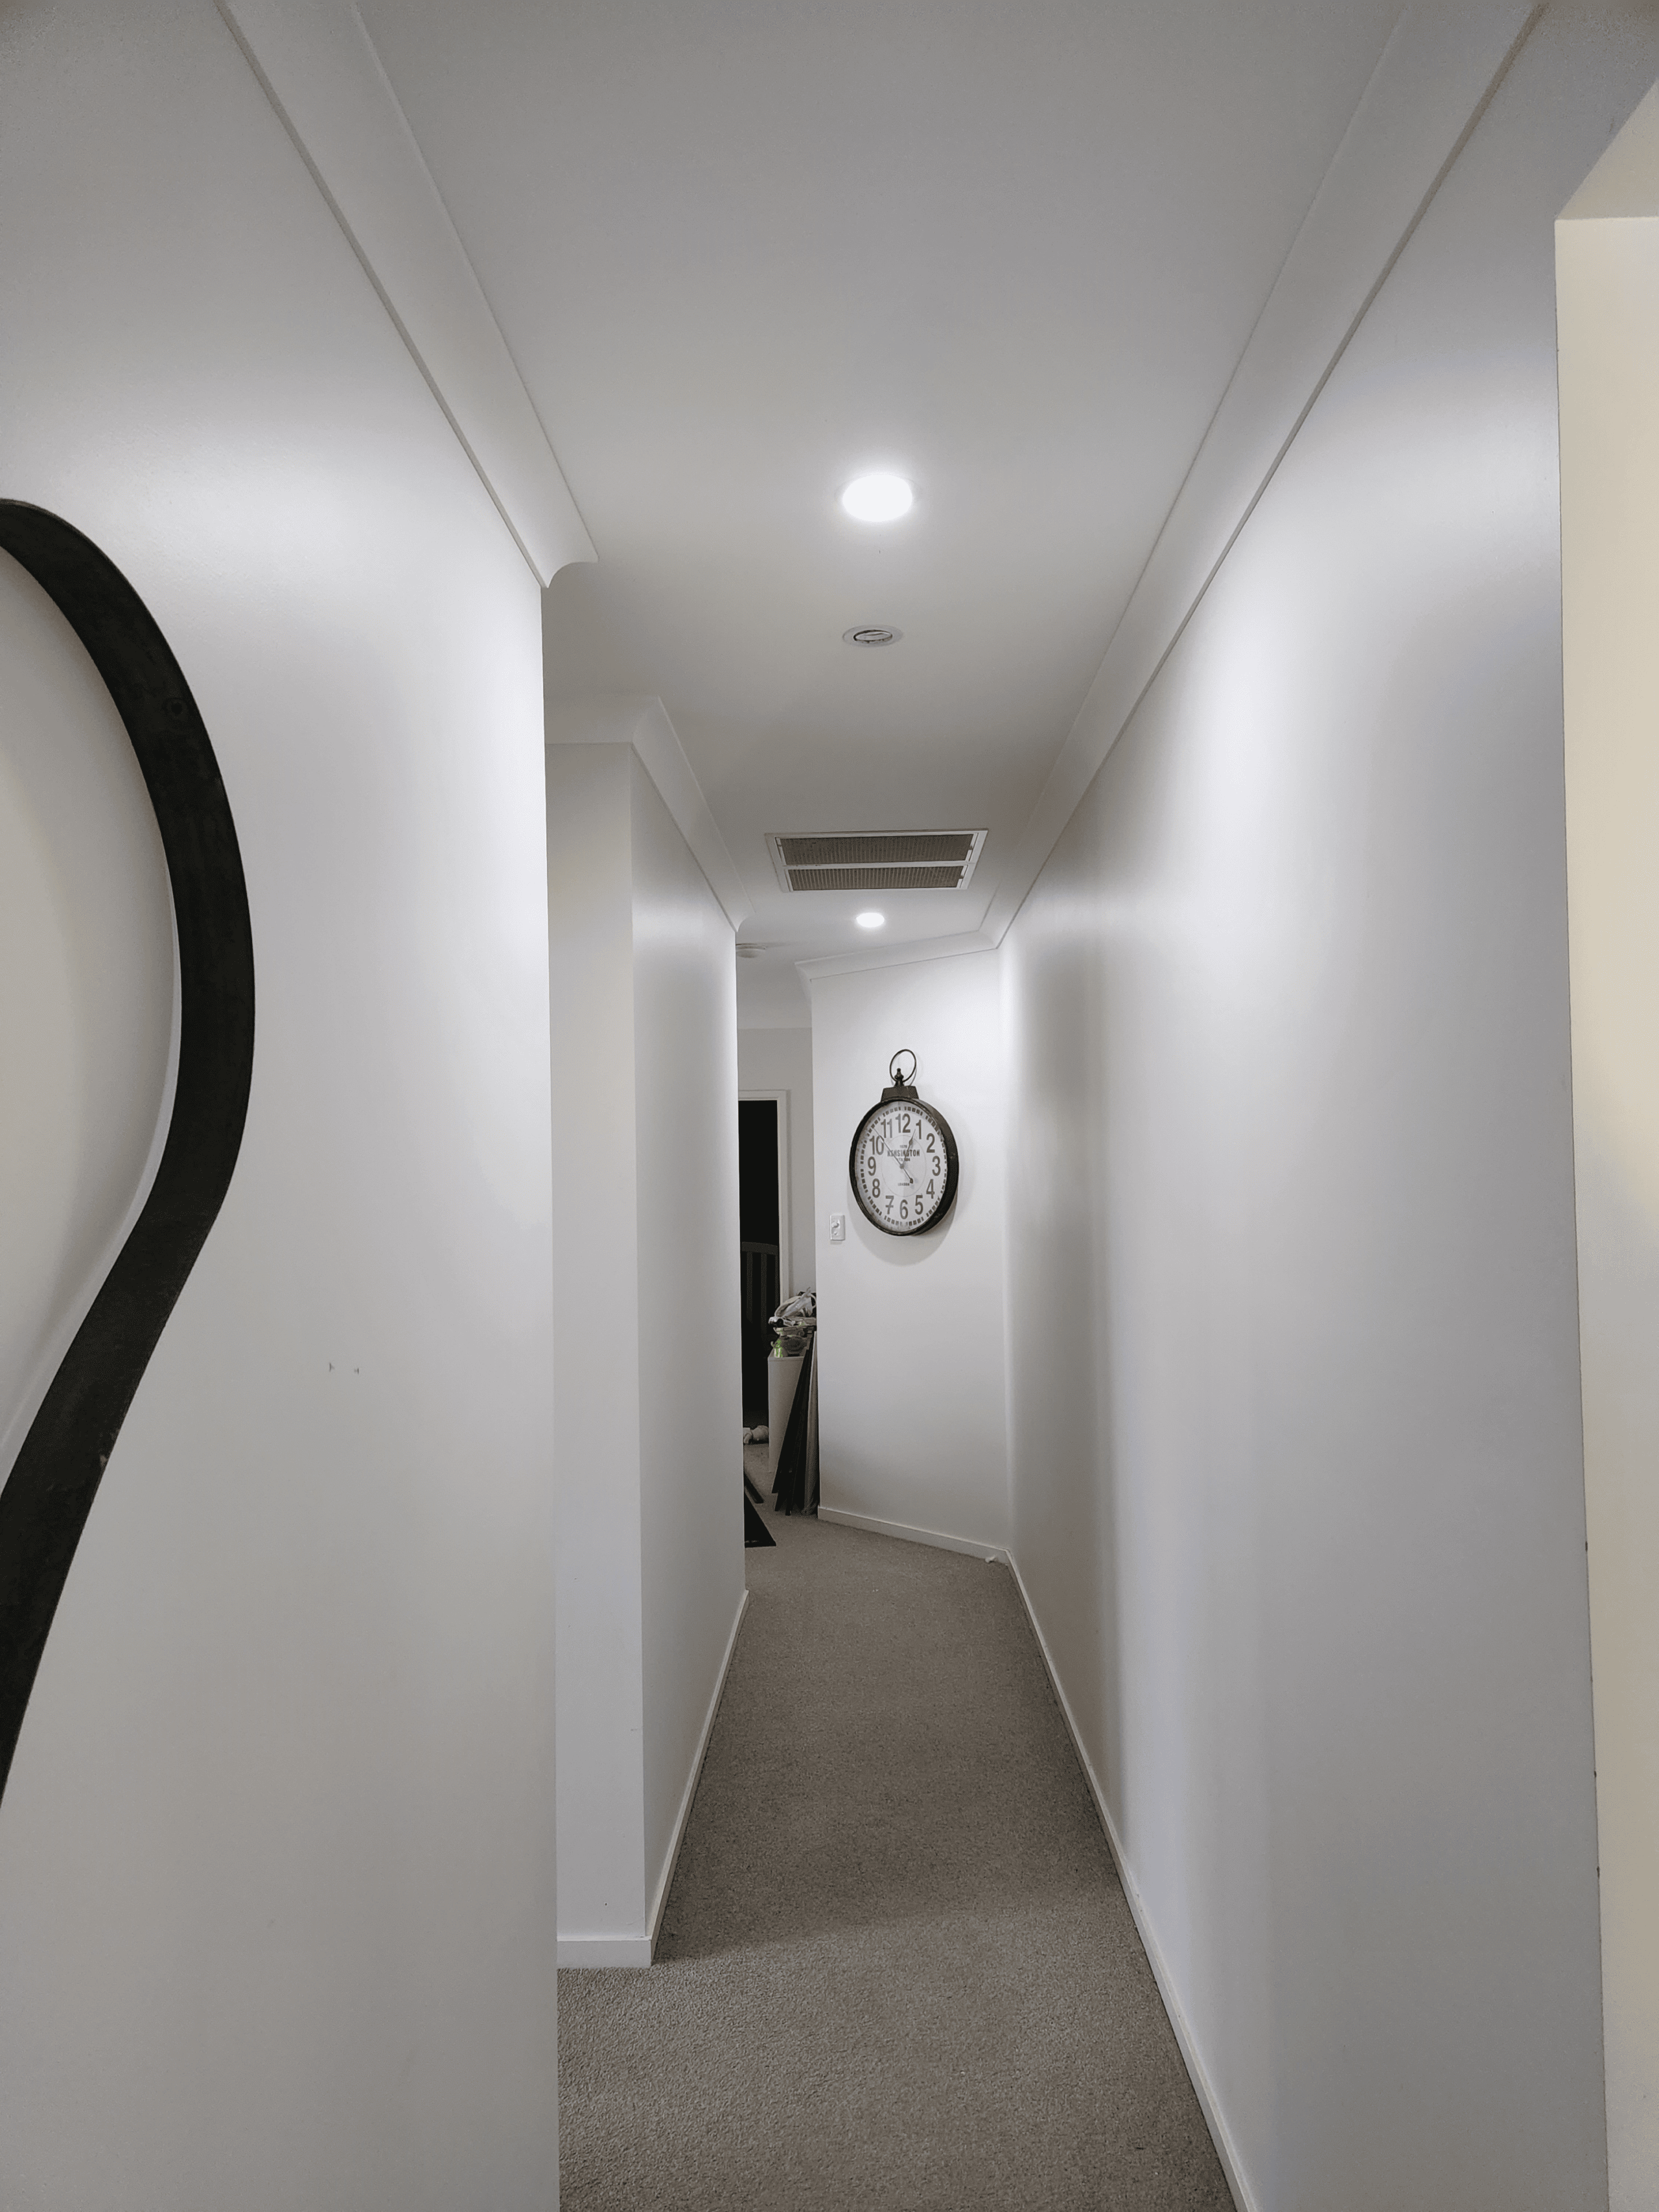 Solar lighting in hallway